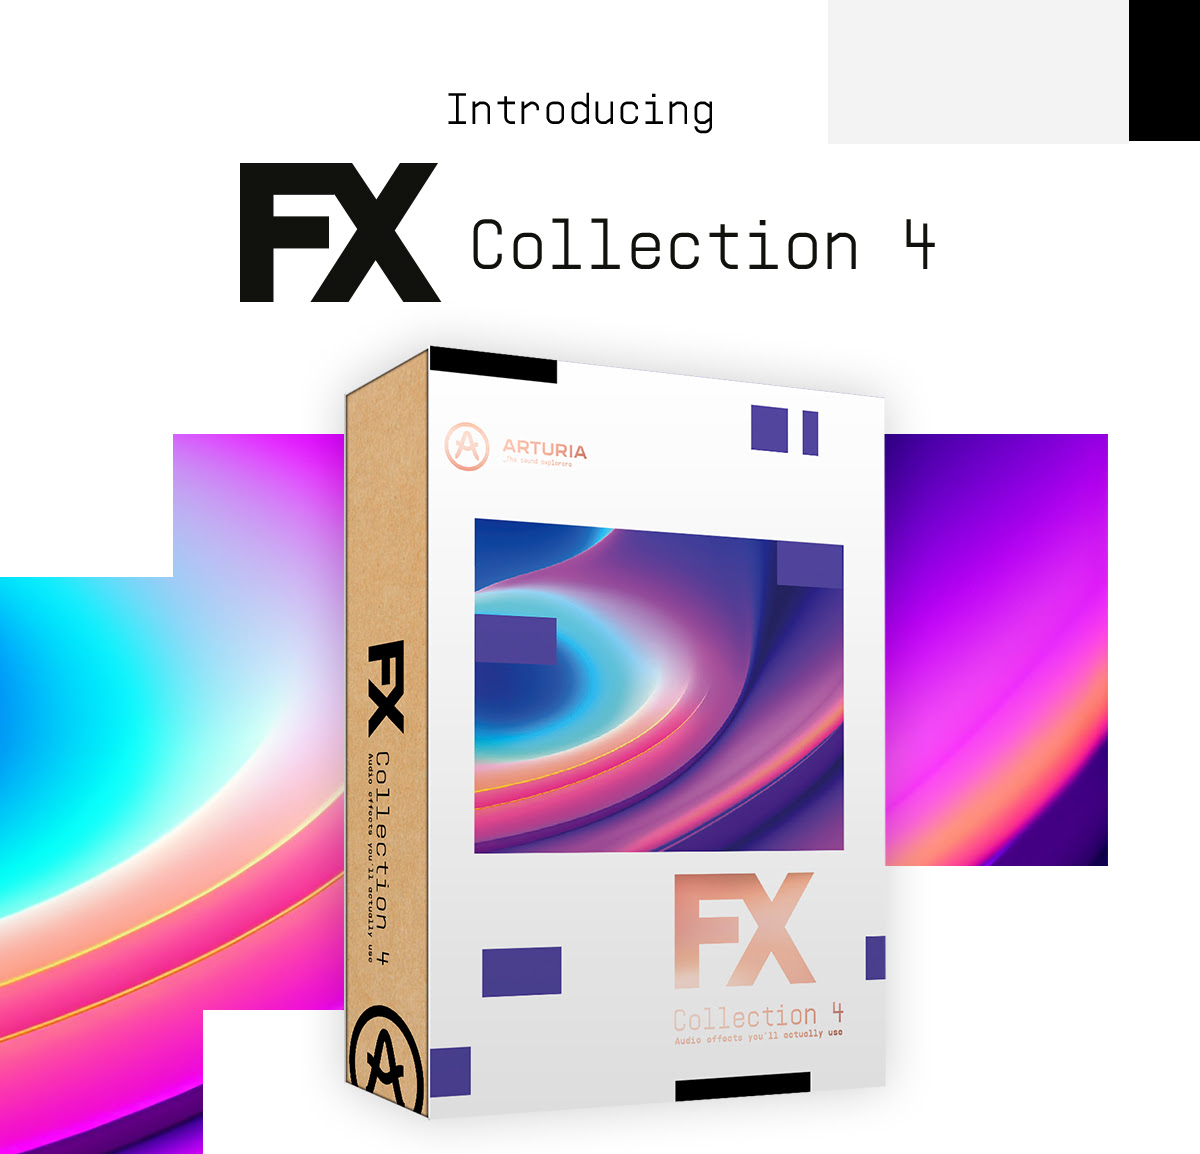 Arturia FX Collection 4